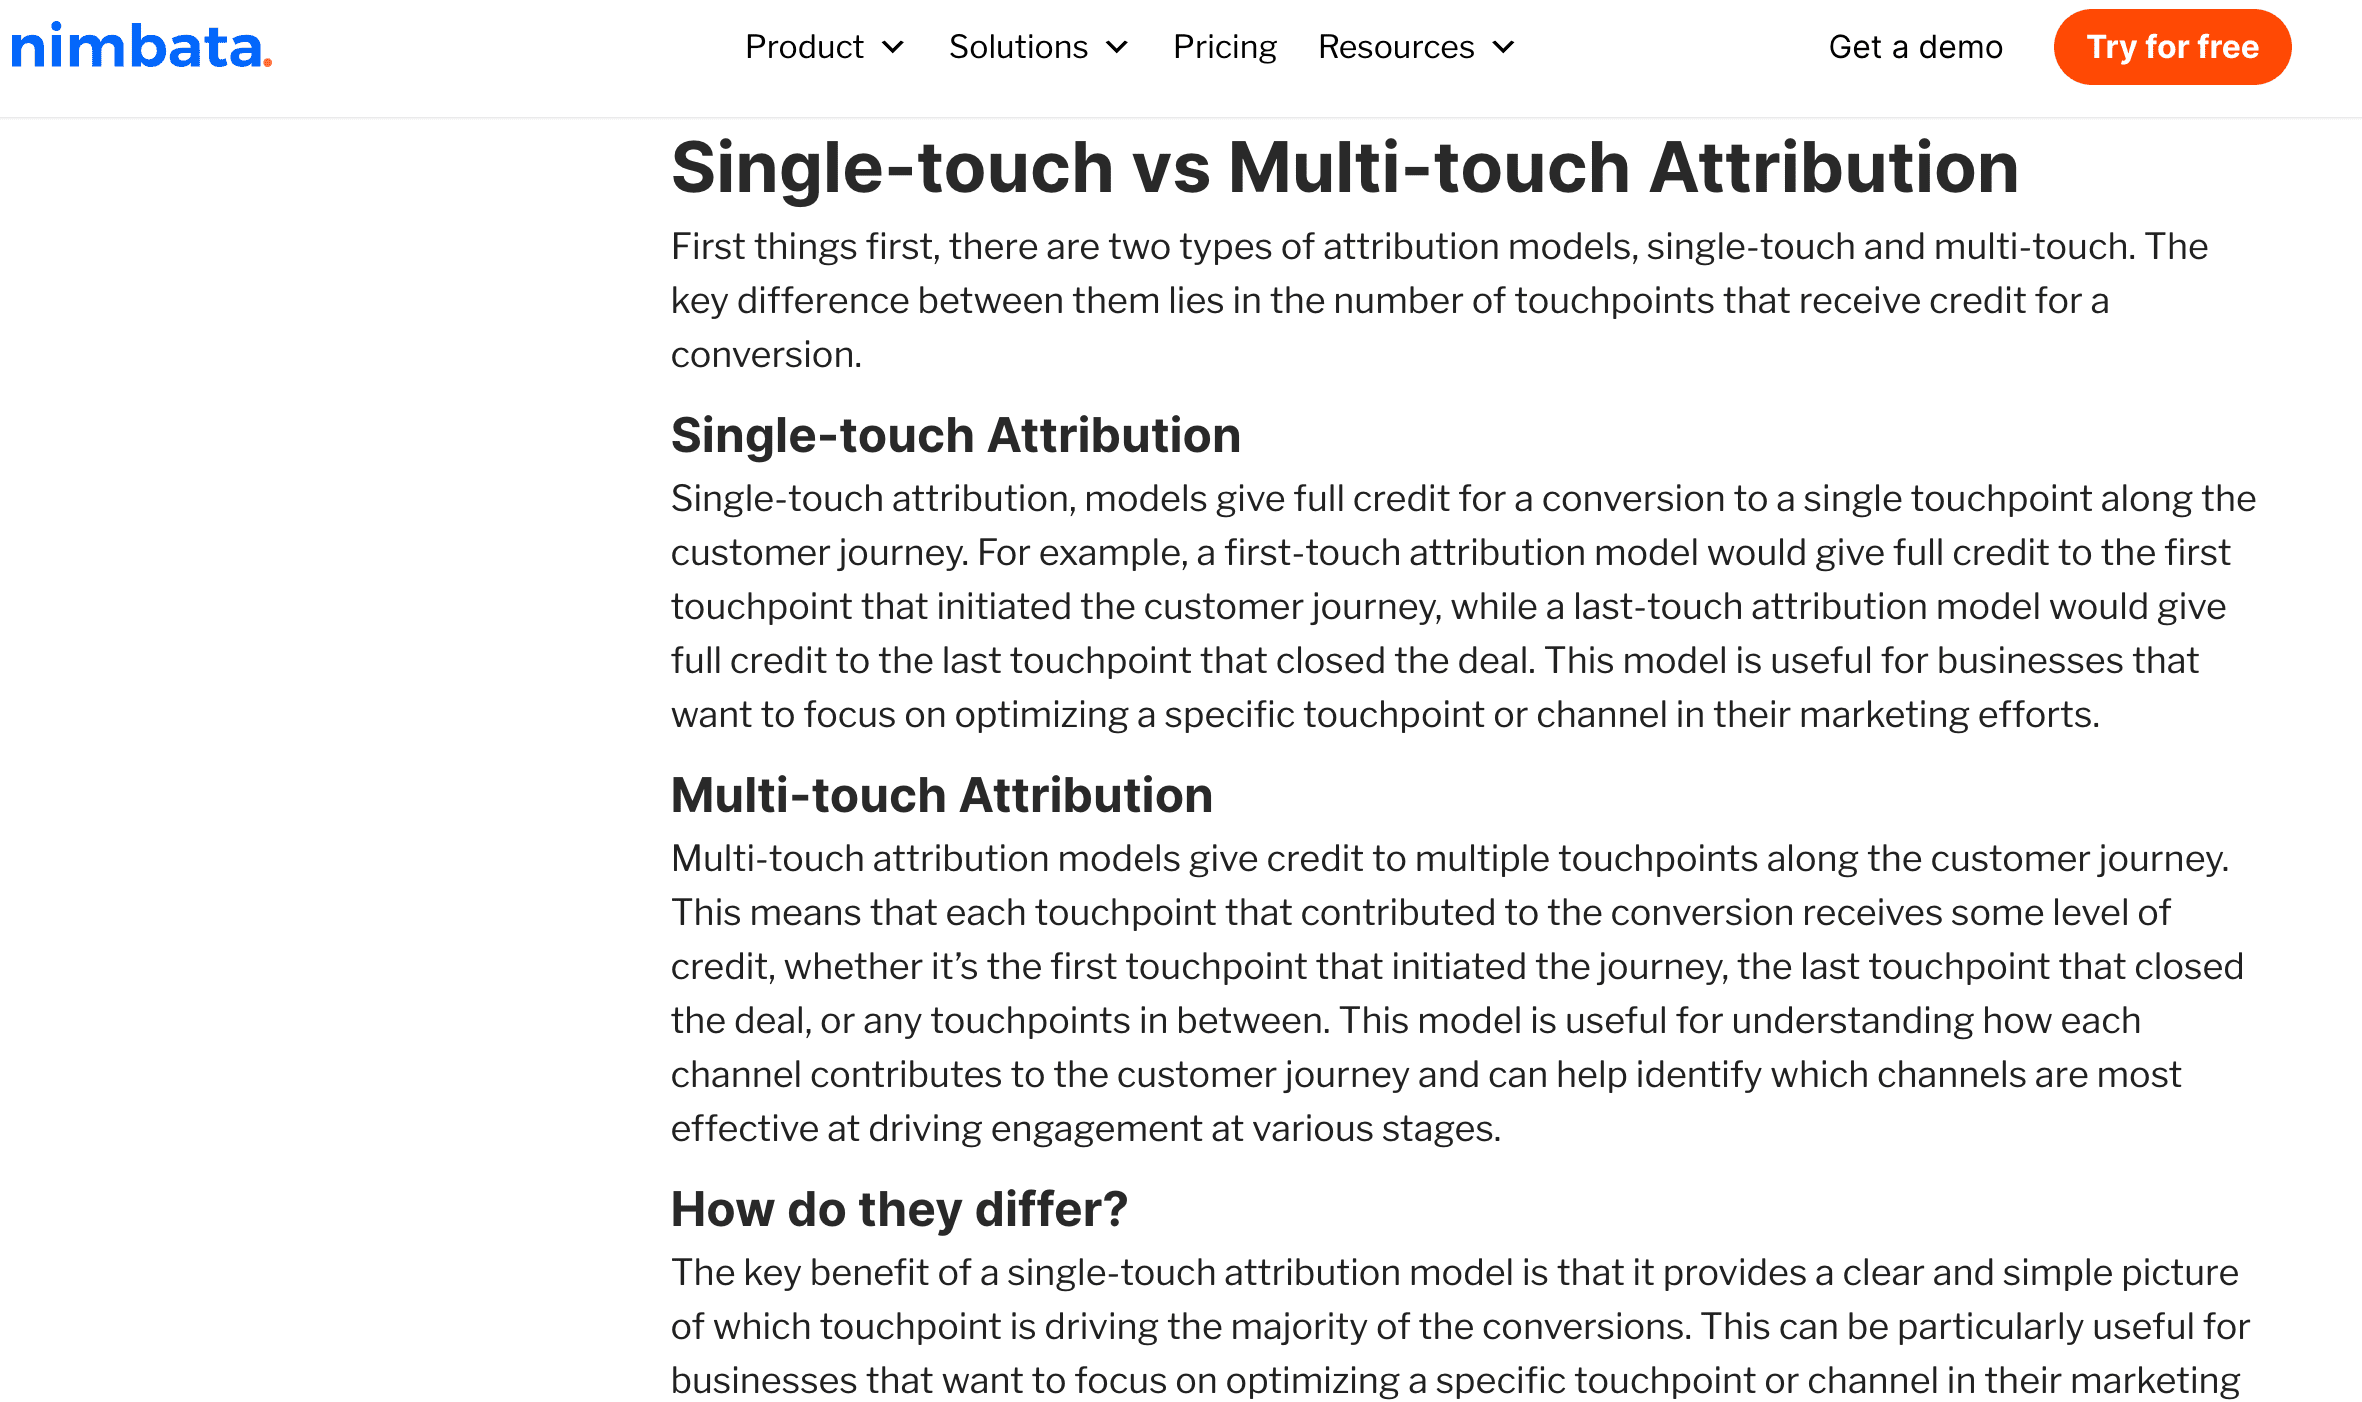 nimbata multi-touch attribution modeling